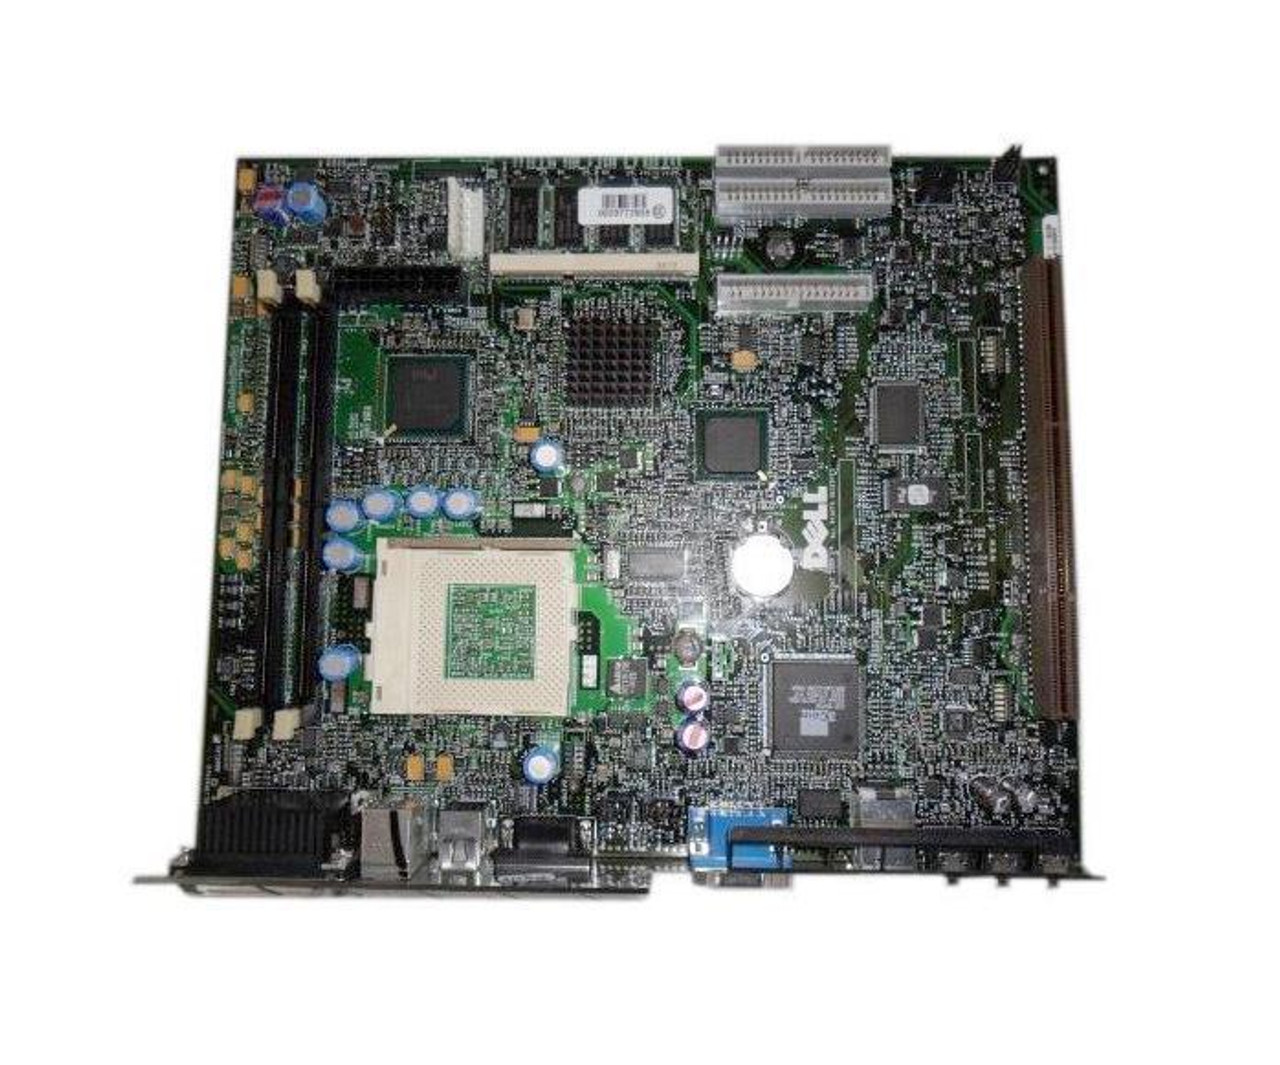 MX09C47506 Dell System Board (Motherboard) Socket-370 for OptiPlex GX200 (Refurbished)